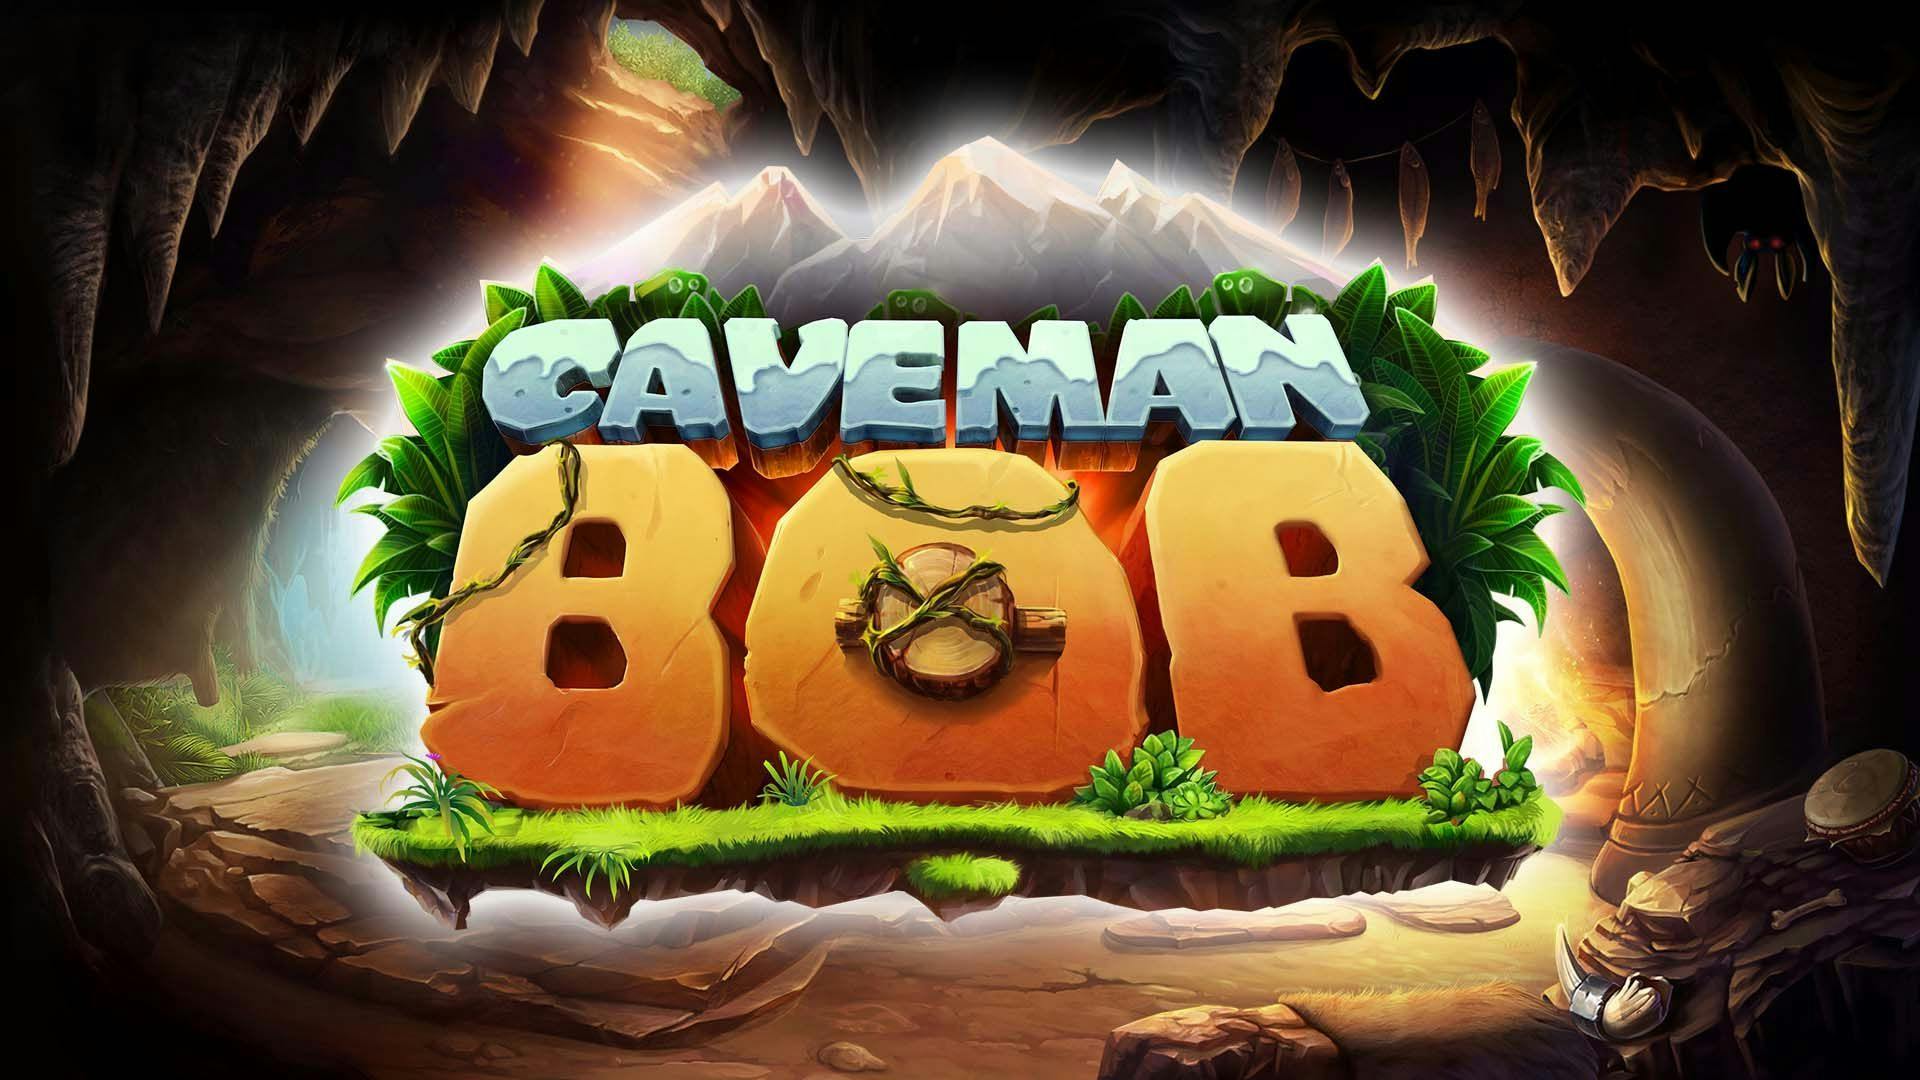 Caveman Bob Slot Machine Online Free Game Play